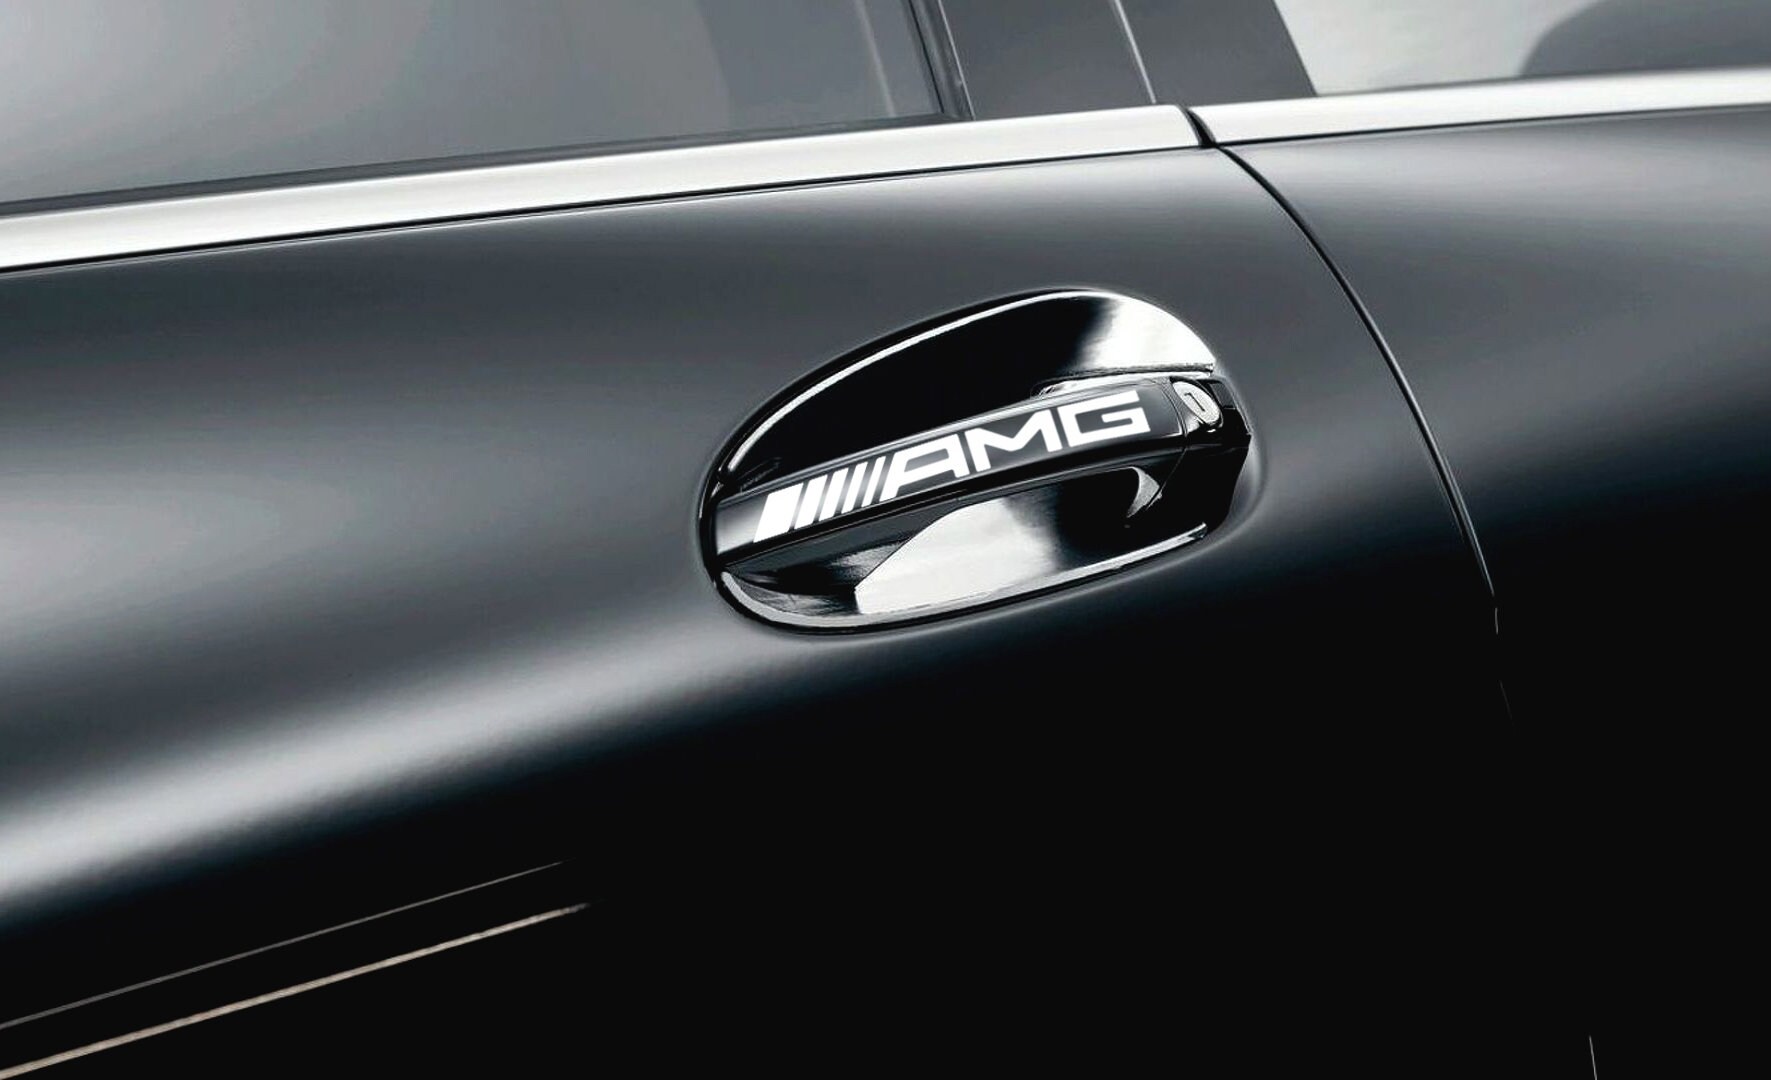 x2 AMG PERFORMANCE MERCEDES CAR STICKER DECAL LOGO DECOR RACING VINYL  GRAPHICS